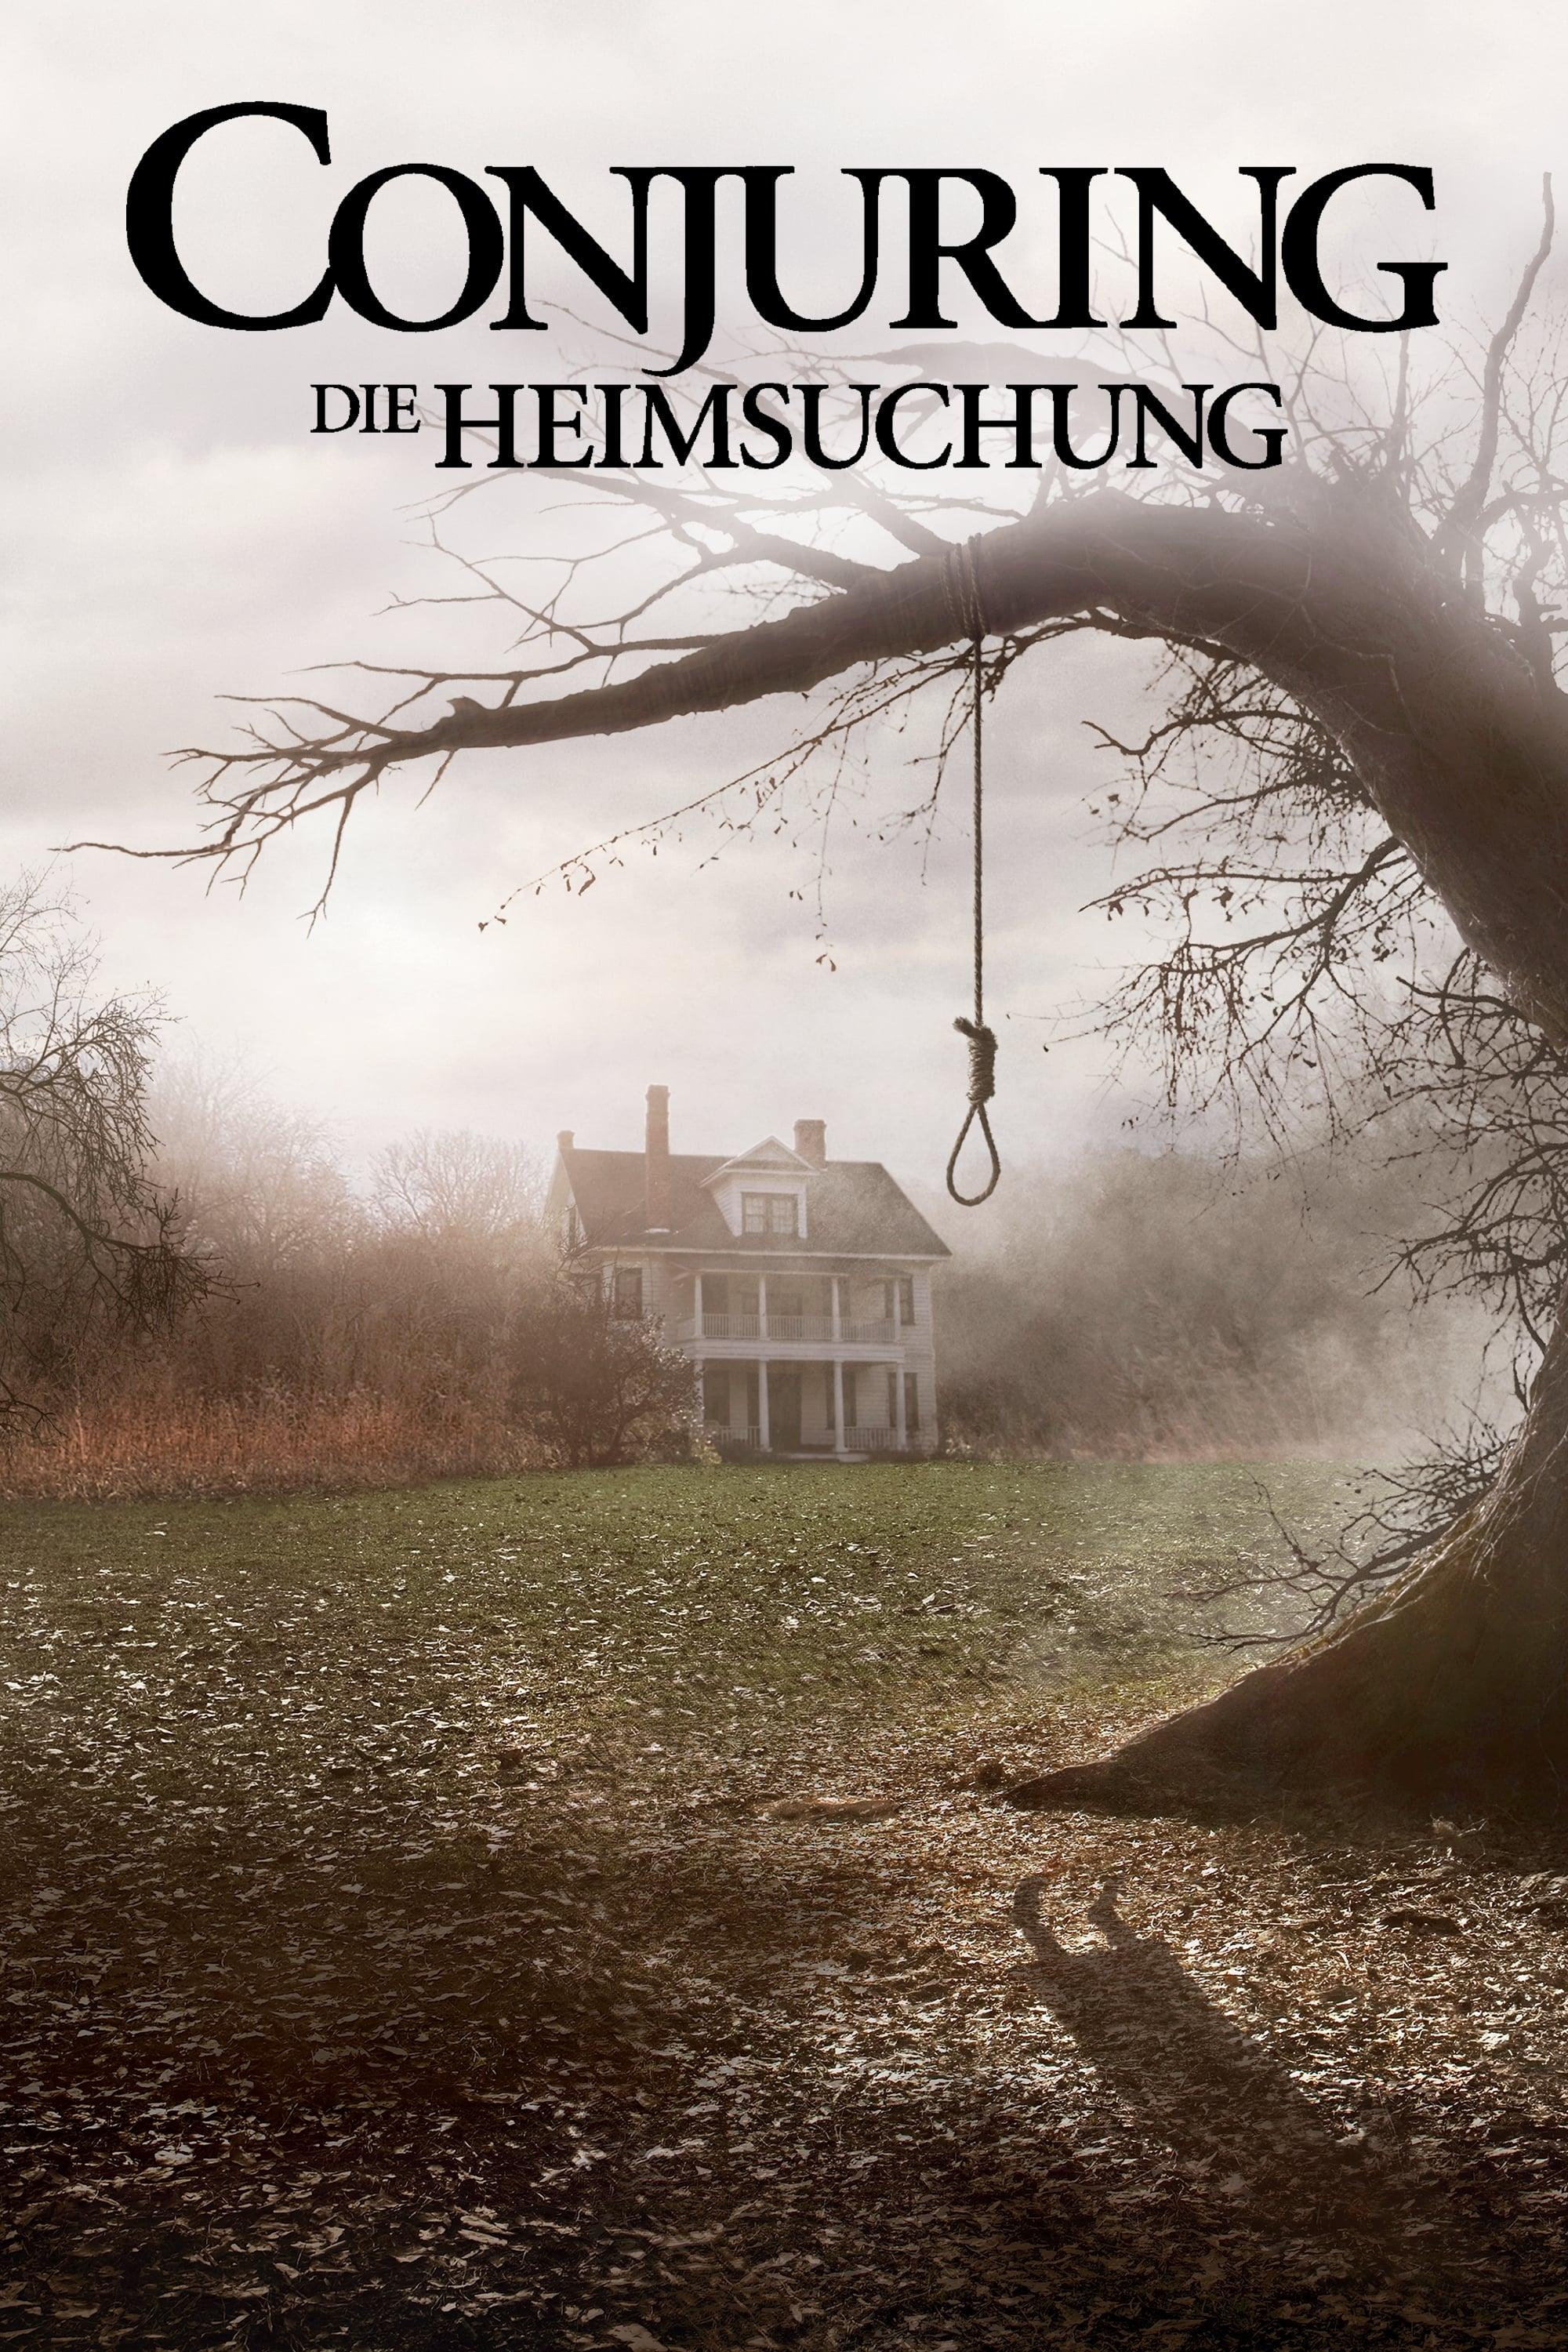 Conjuring - Die Heimsuchung poster